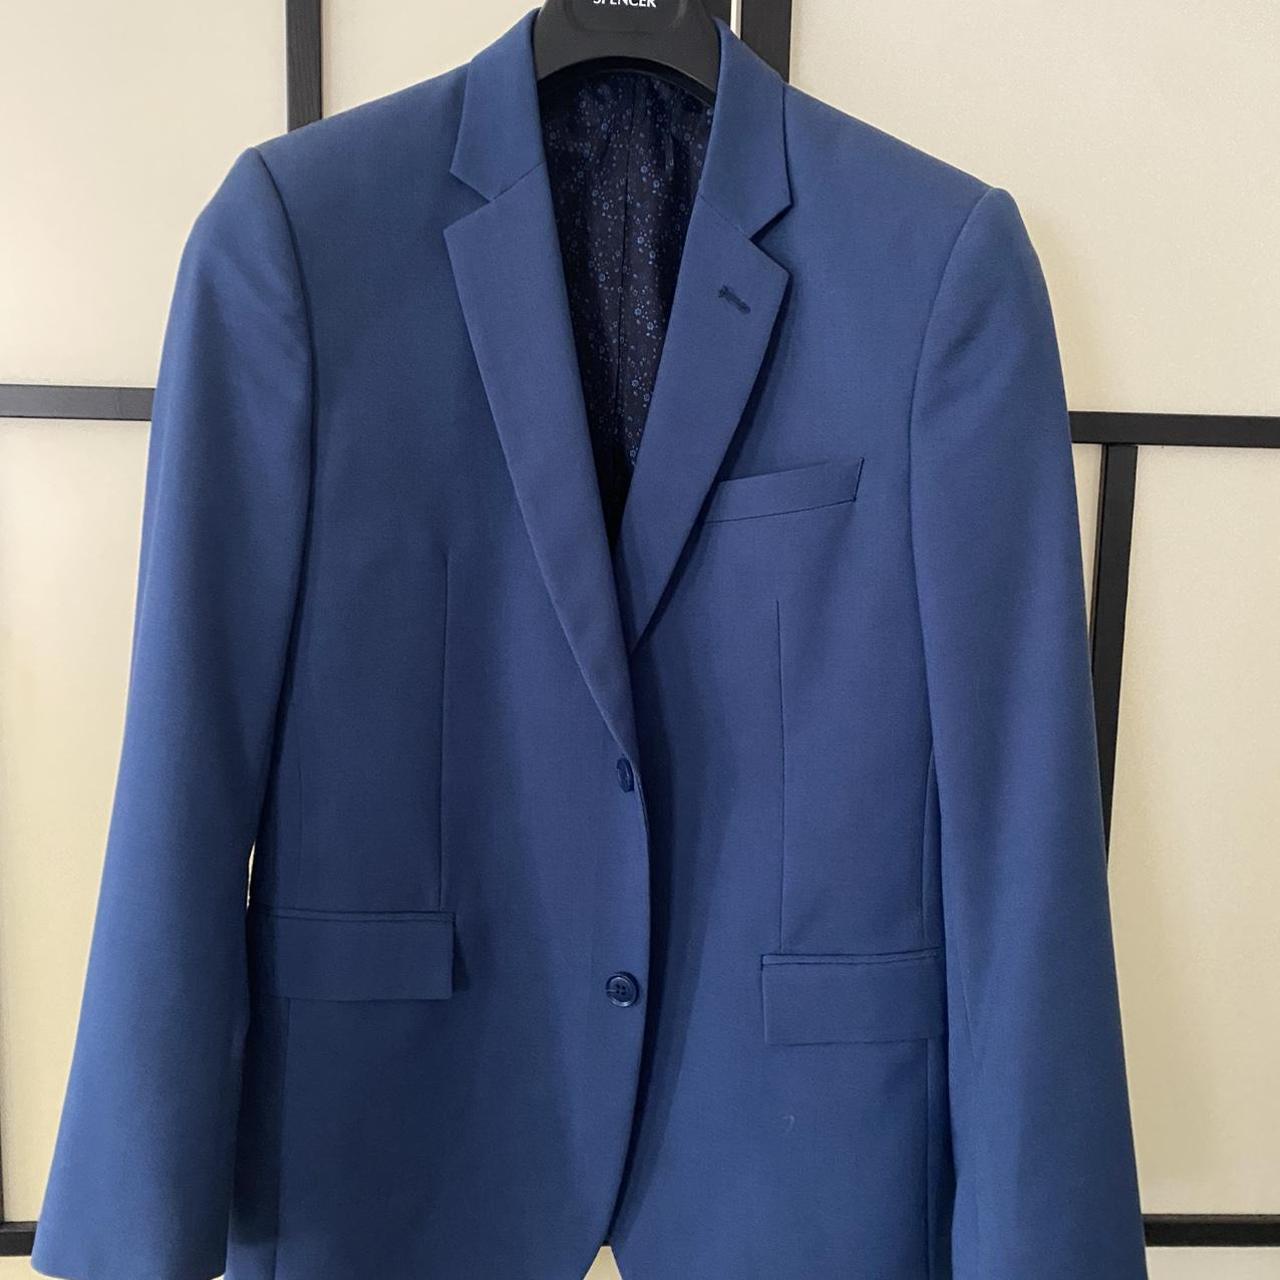 Boys/Mens blue suit jacket, size 36/XS Only worn a... - Depop